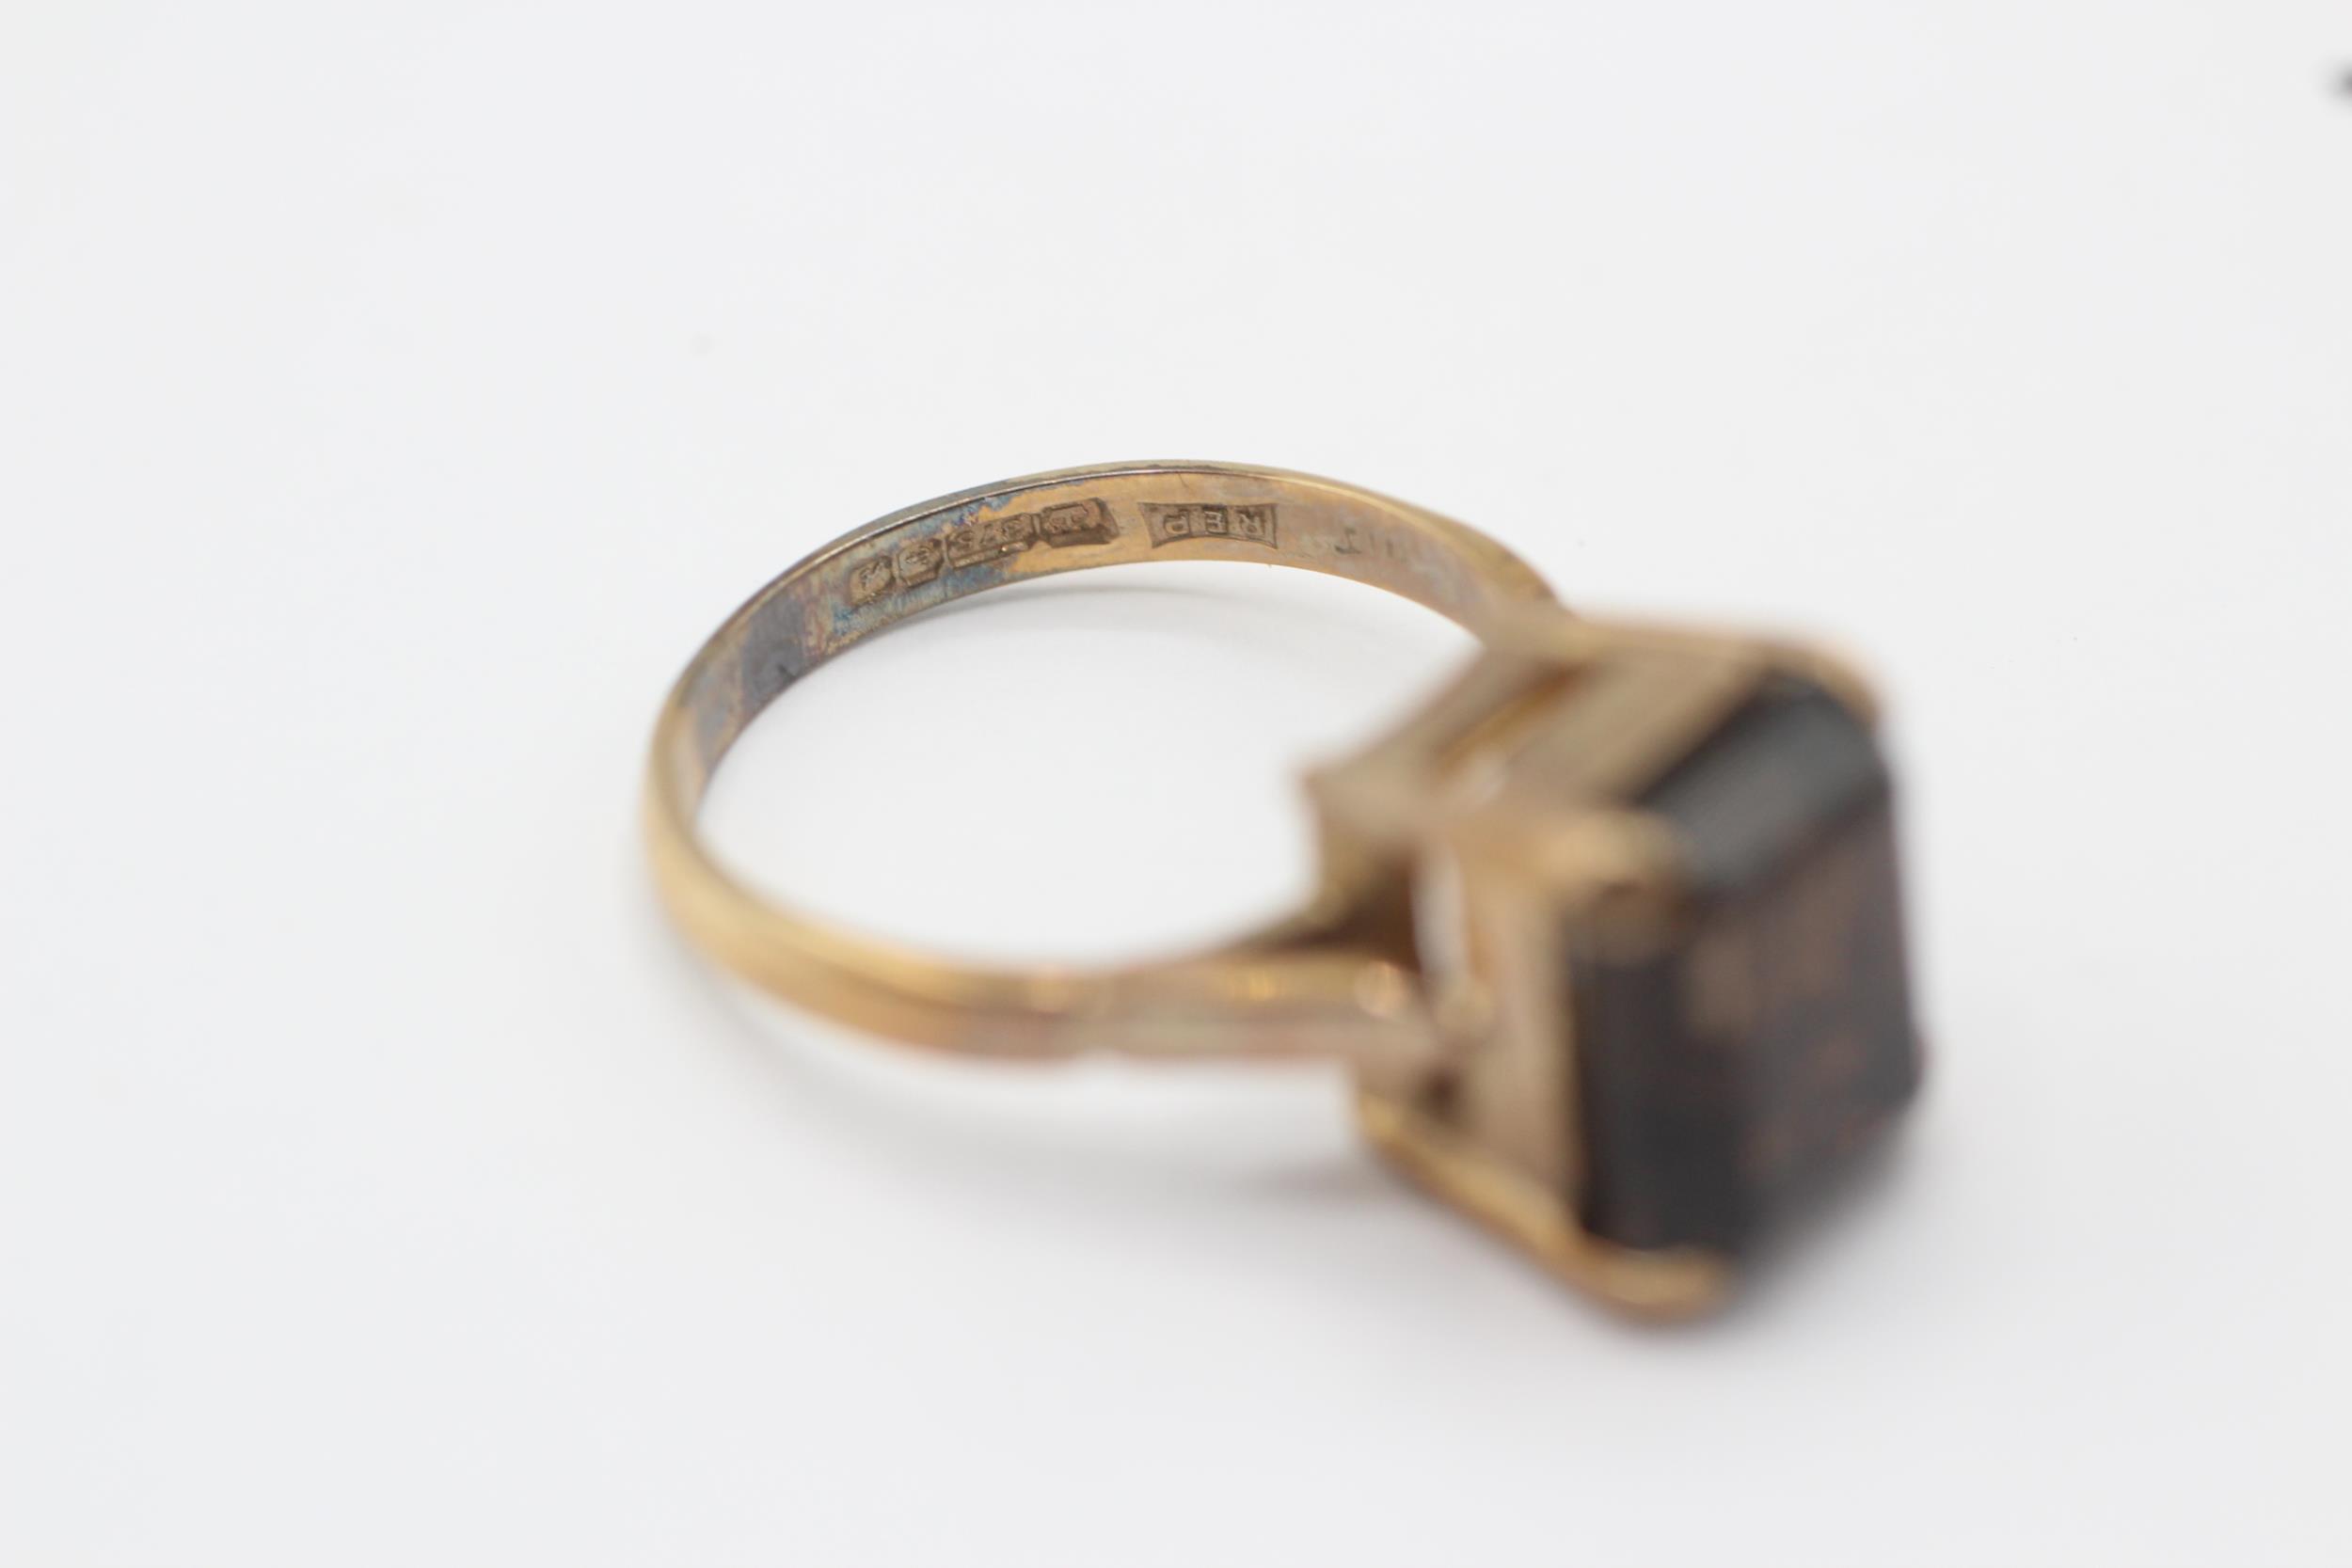 9ct gold smokey quartz single stone ring Size K 3.6 g - Image 6 of 6